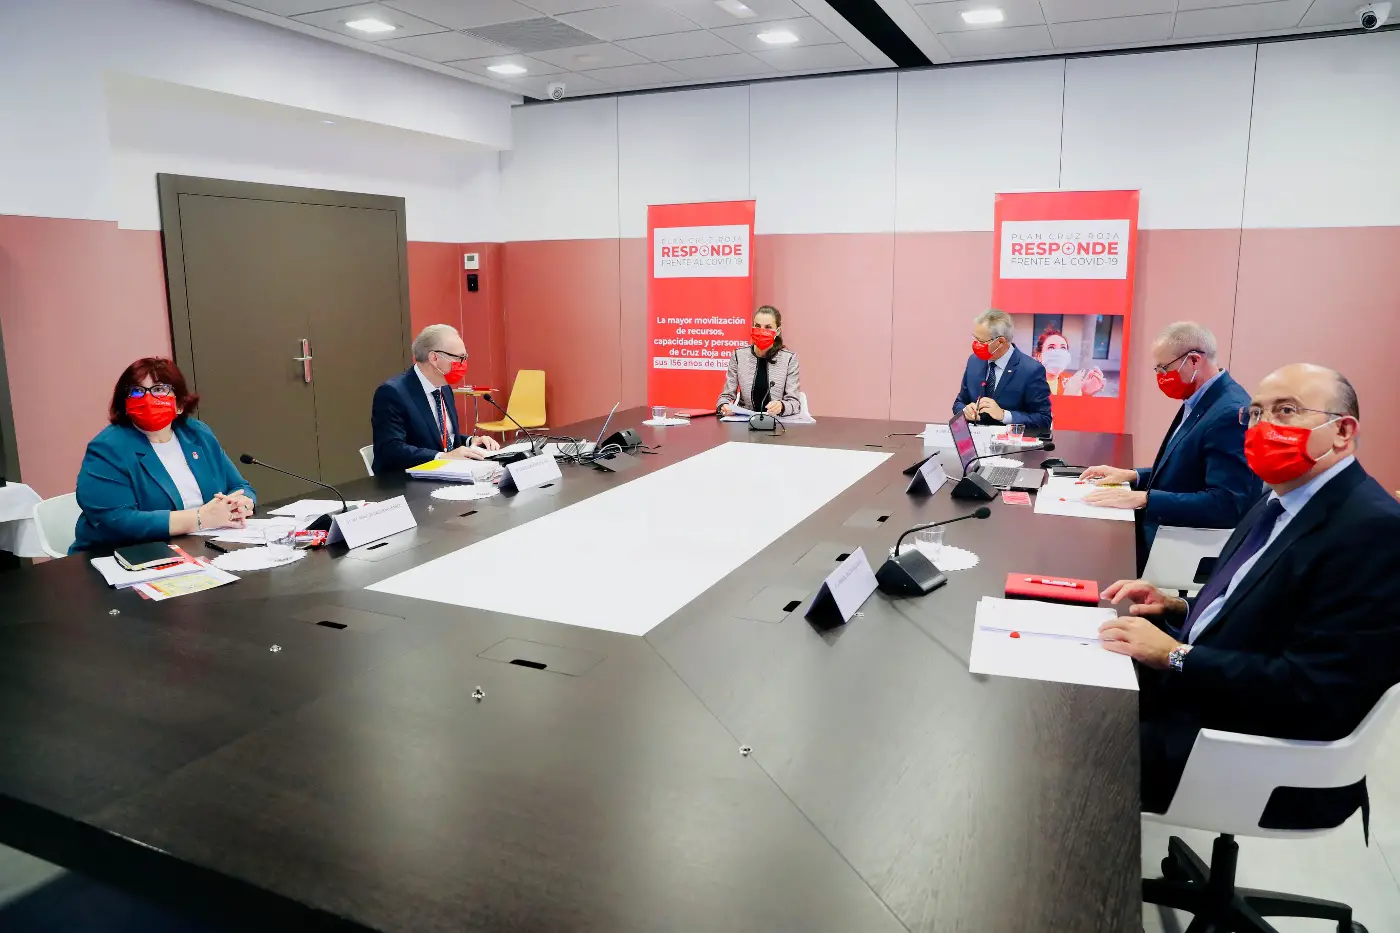 Queen Letizia at Spanish Red cross meeting